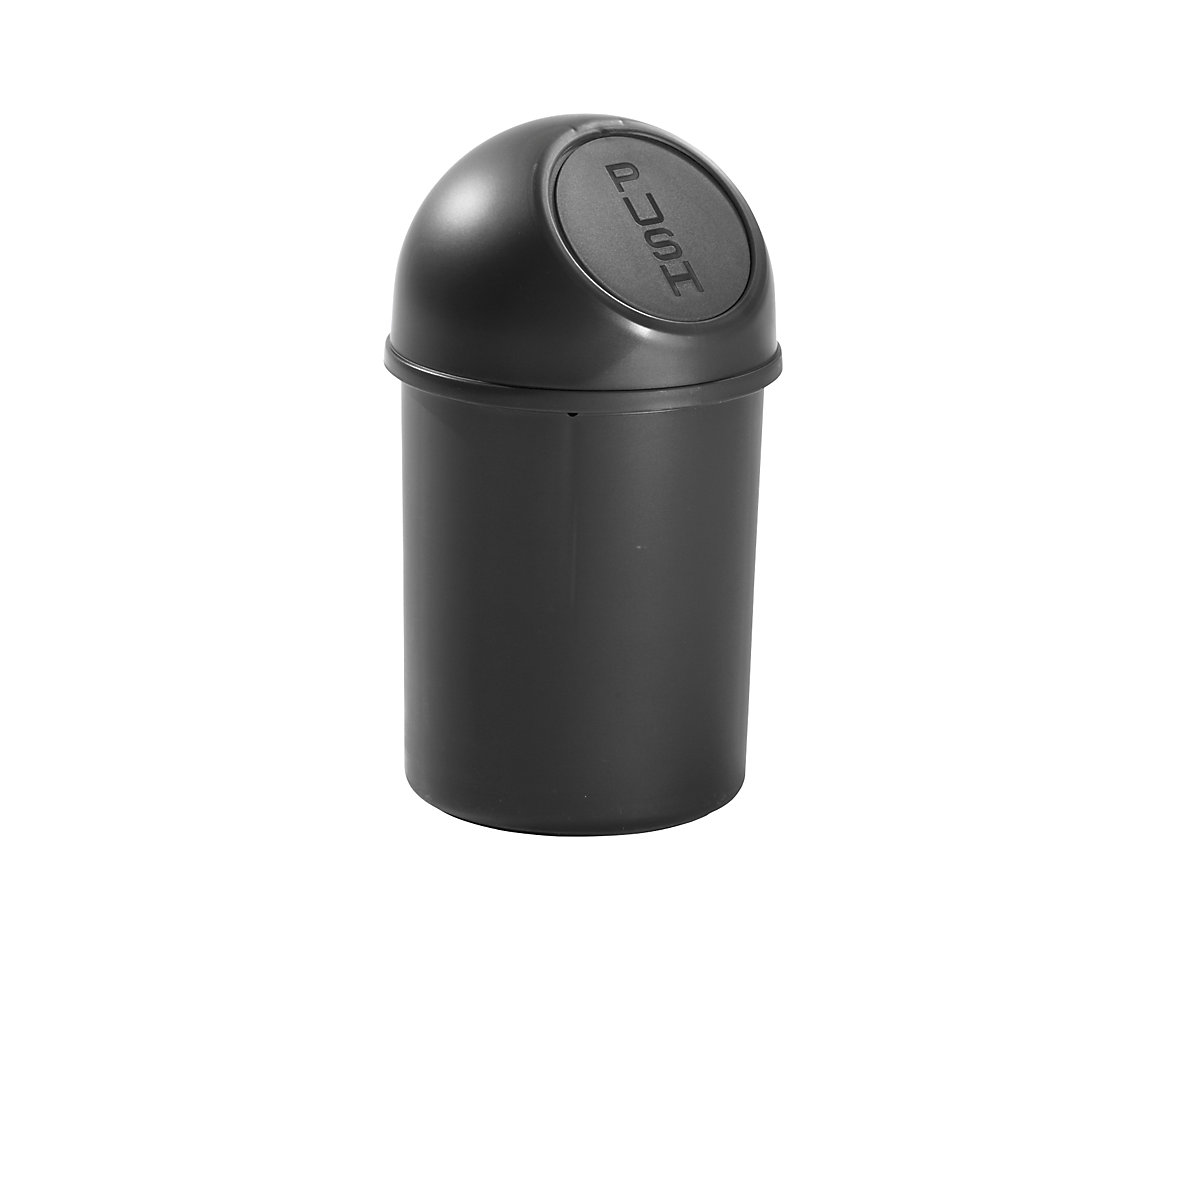 Push top waste bin made of plastic – helit, capacity 6 l, pack of 6, HxØ 375 x 216 mm, black-3